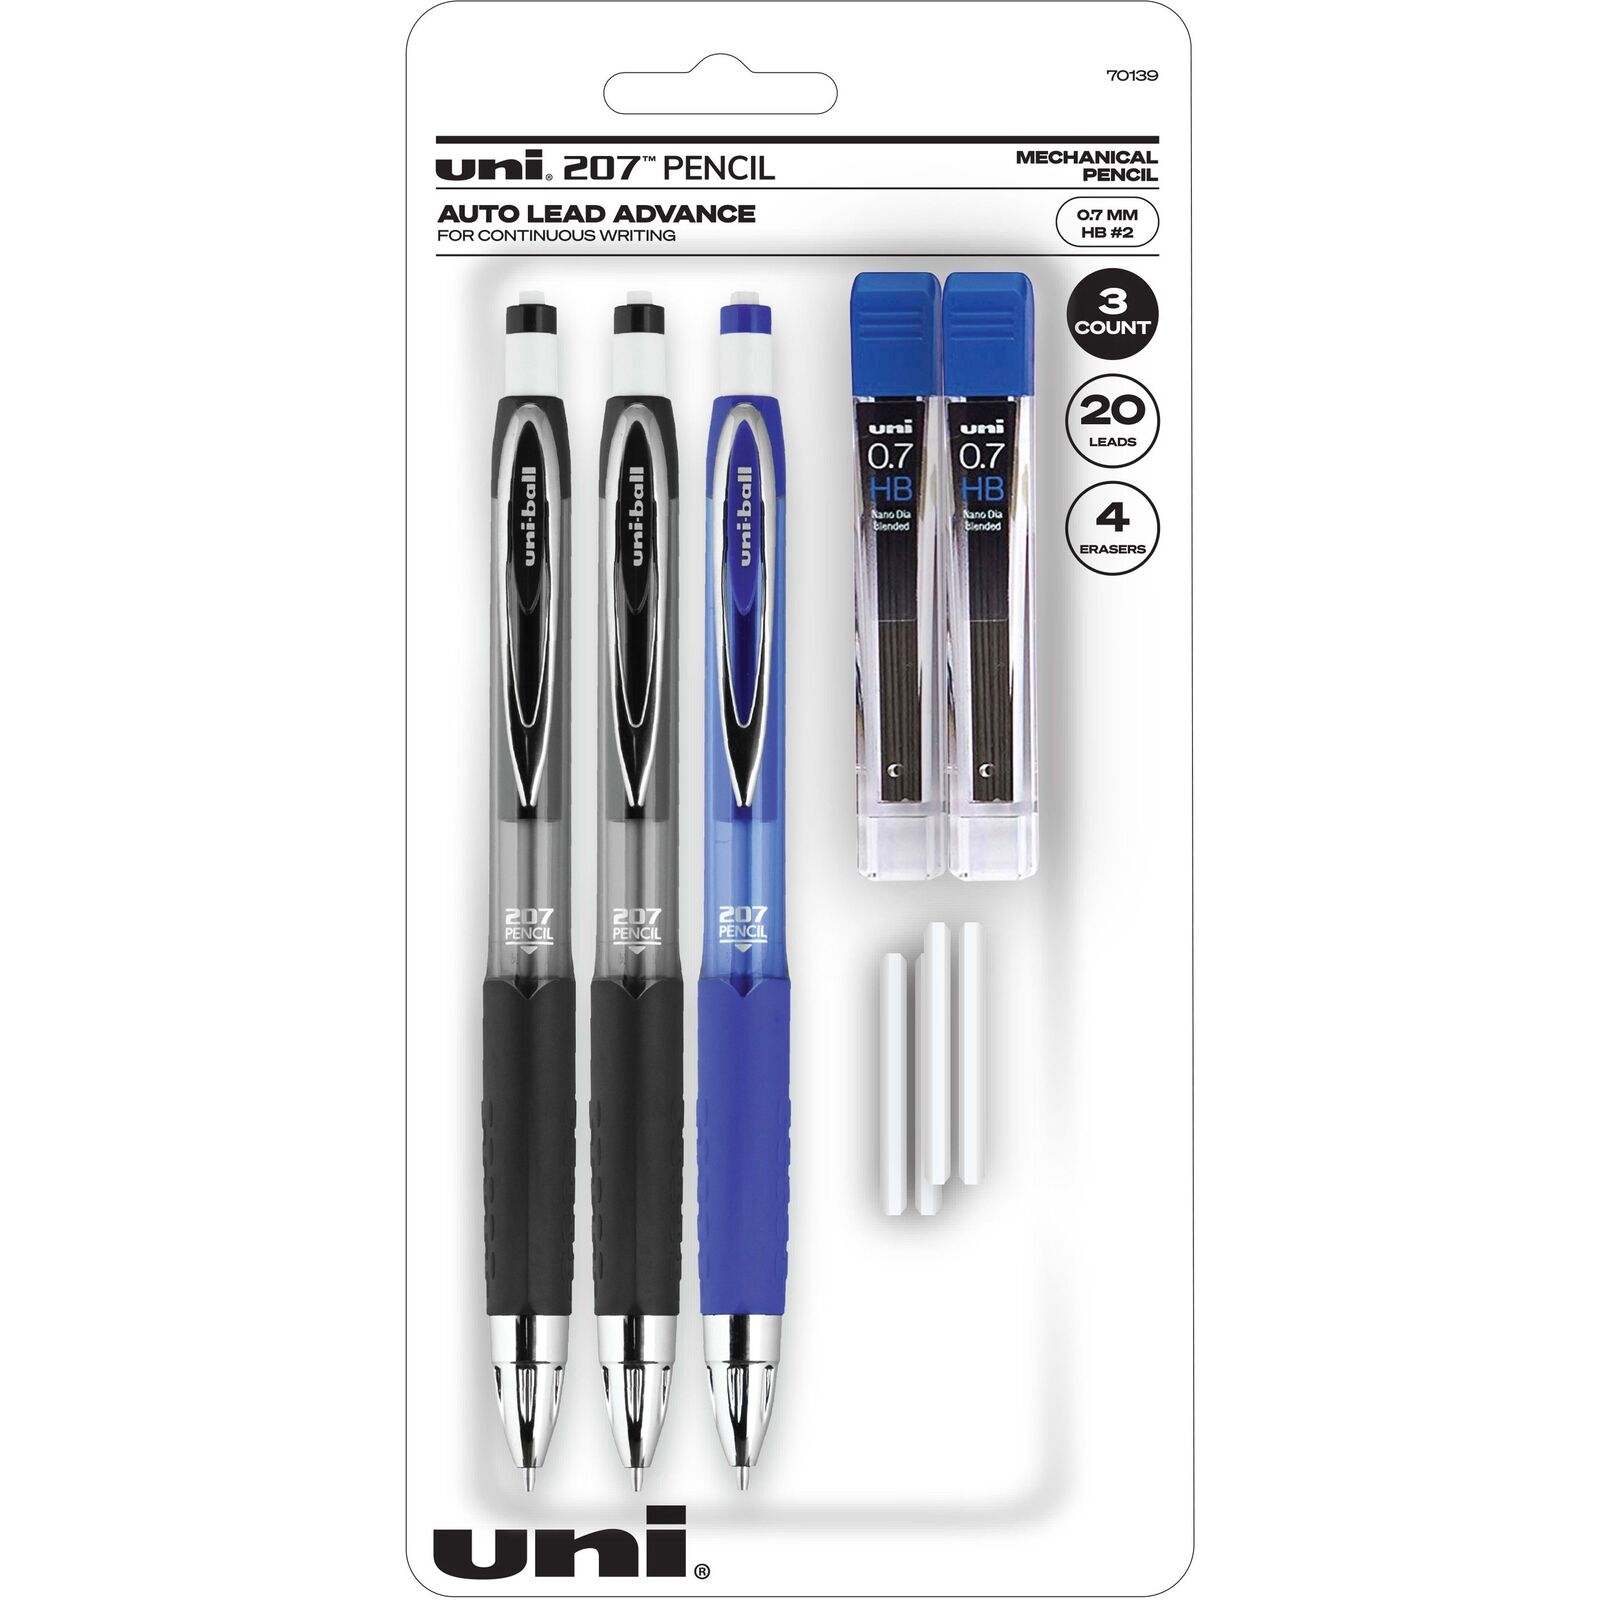 Uni-ball 207 Mechanical Pencil Starter Kit, 0.7mm, HB #2, Assorted Barrels, 3pk